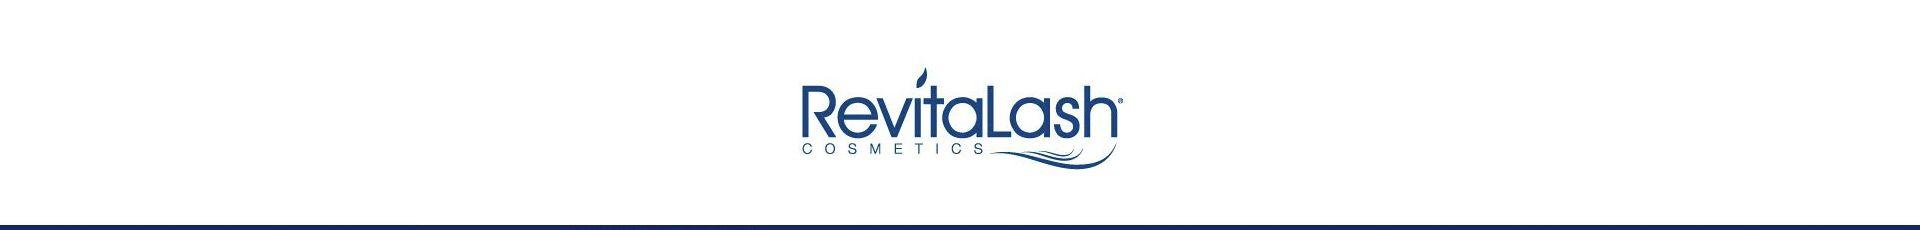 Revitalash Logo - RevitaLash NZ - Authorised Retailer - Free Overnight Delivery